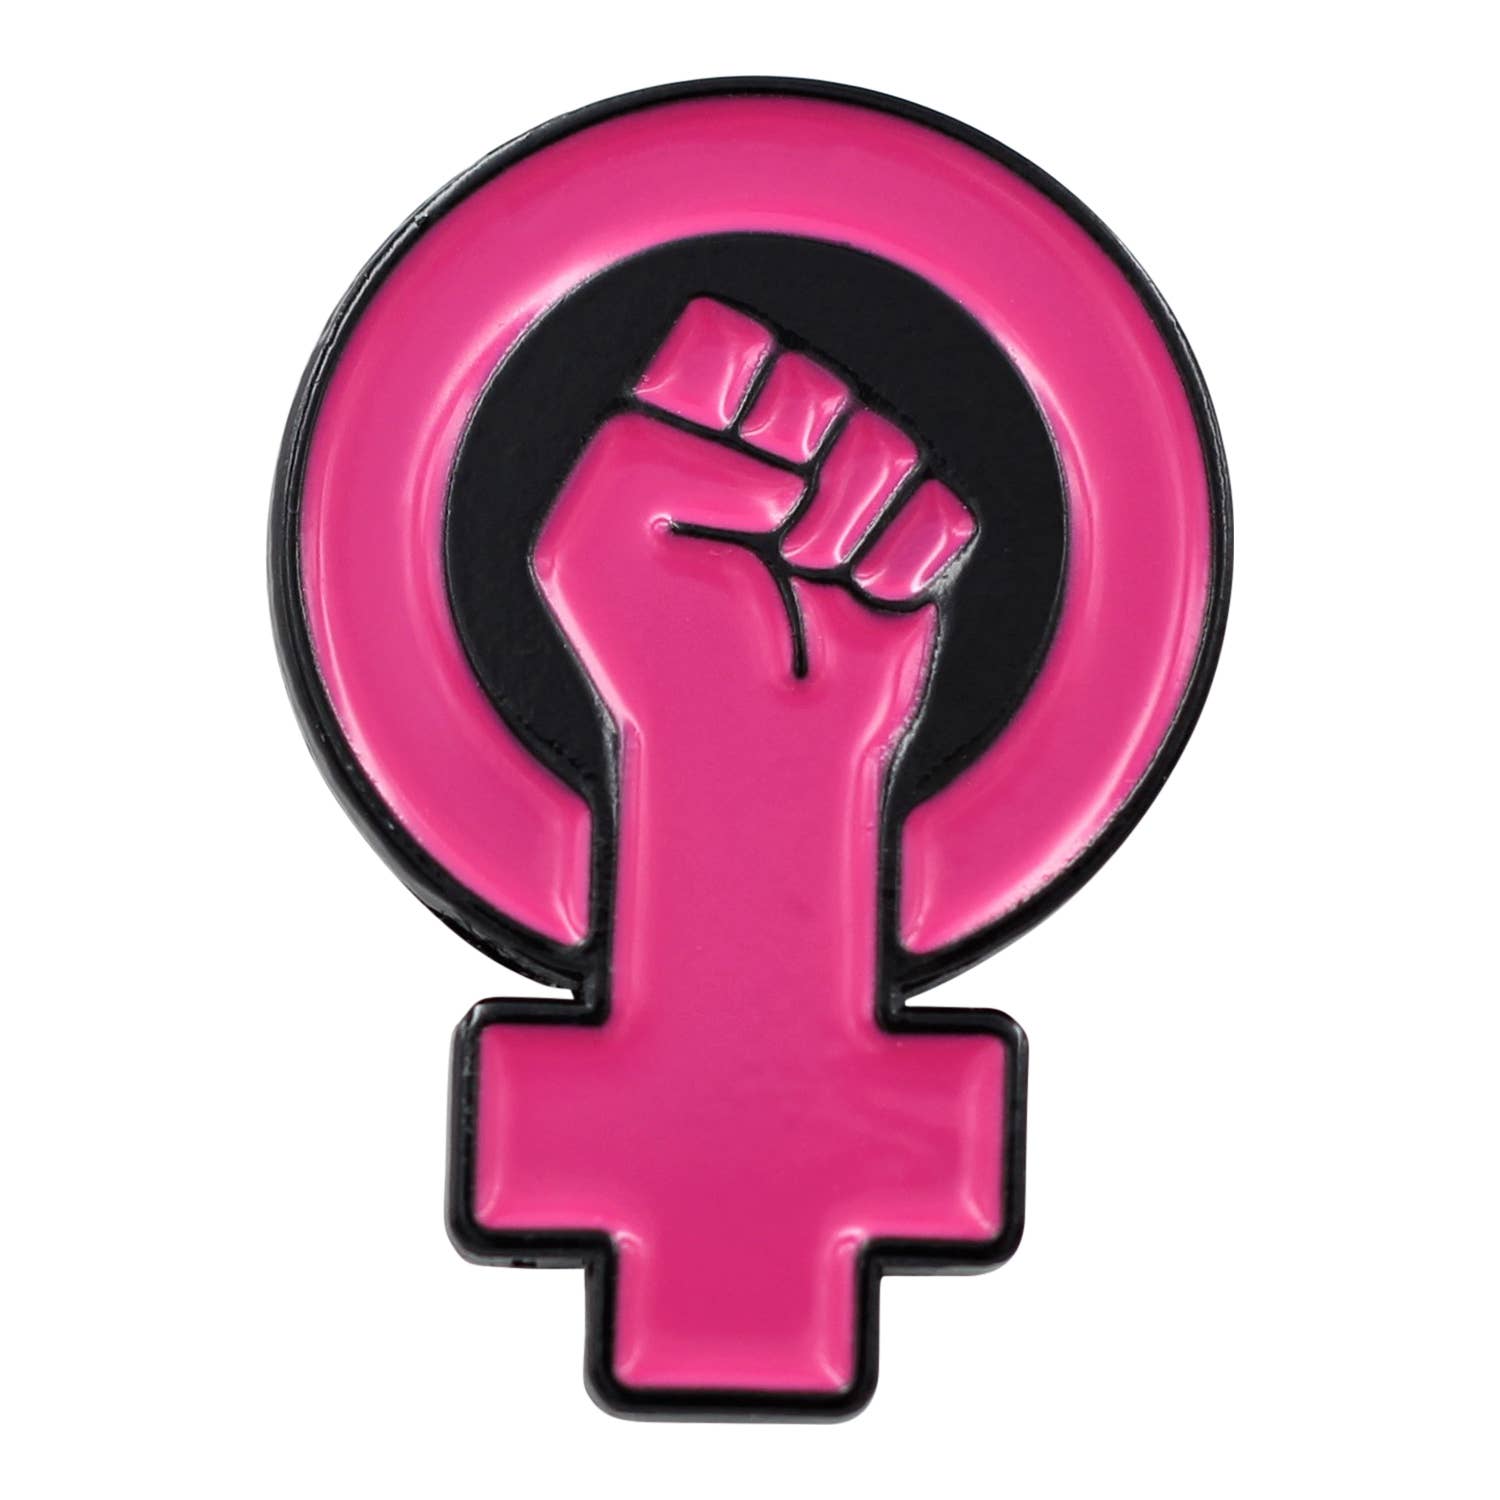 Image of Real Sic Black Women's Power - Raised Feminist Fist Protest Enamel Pin